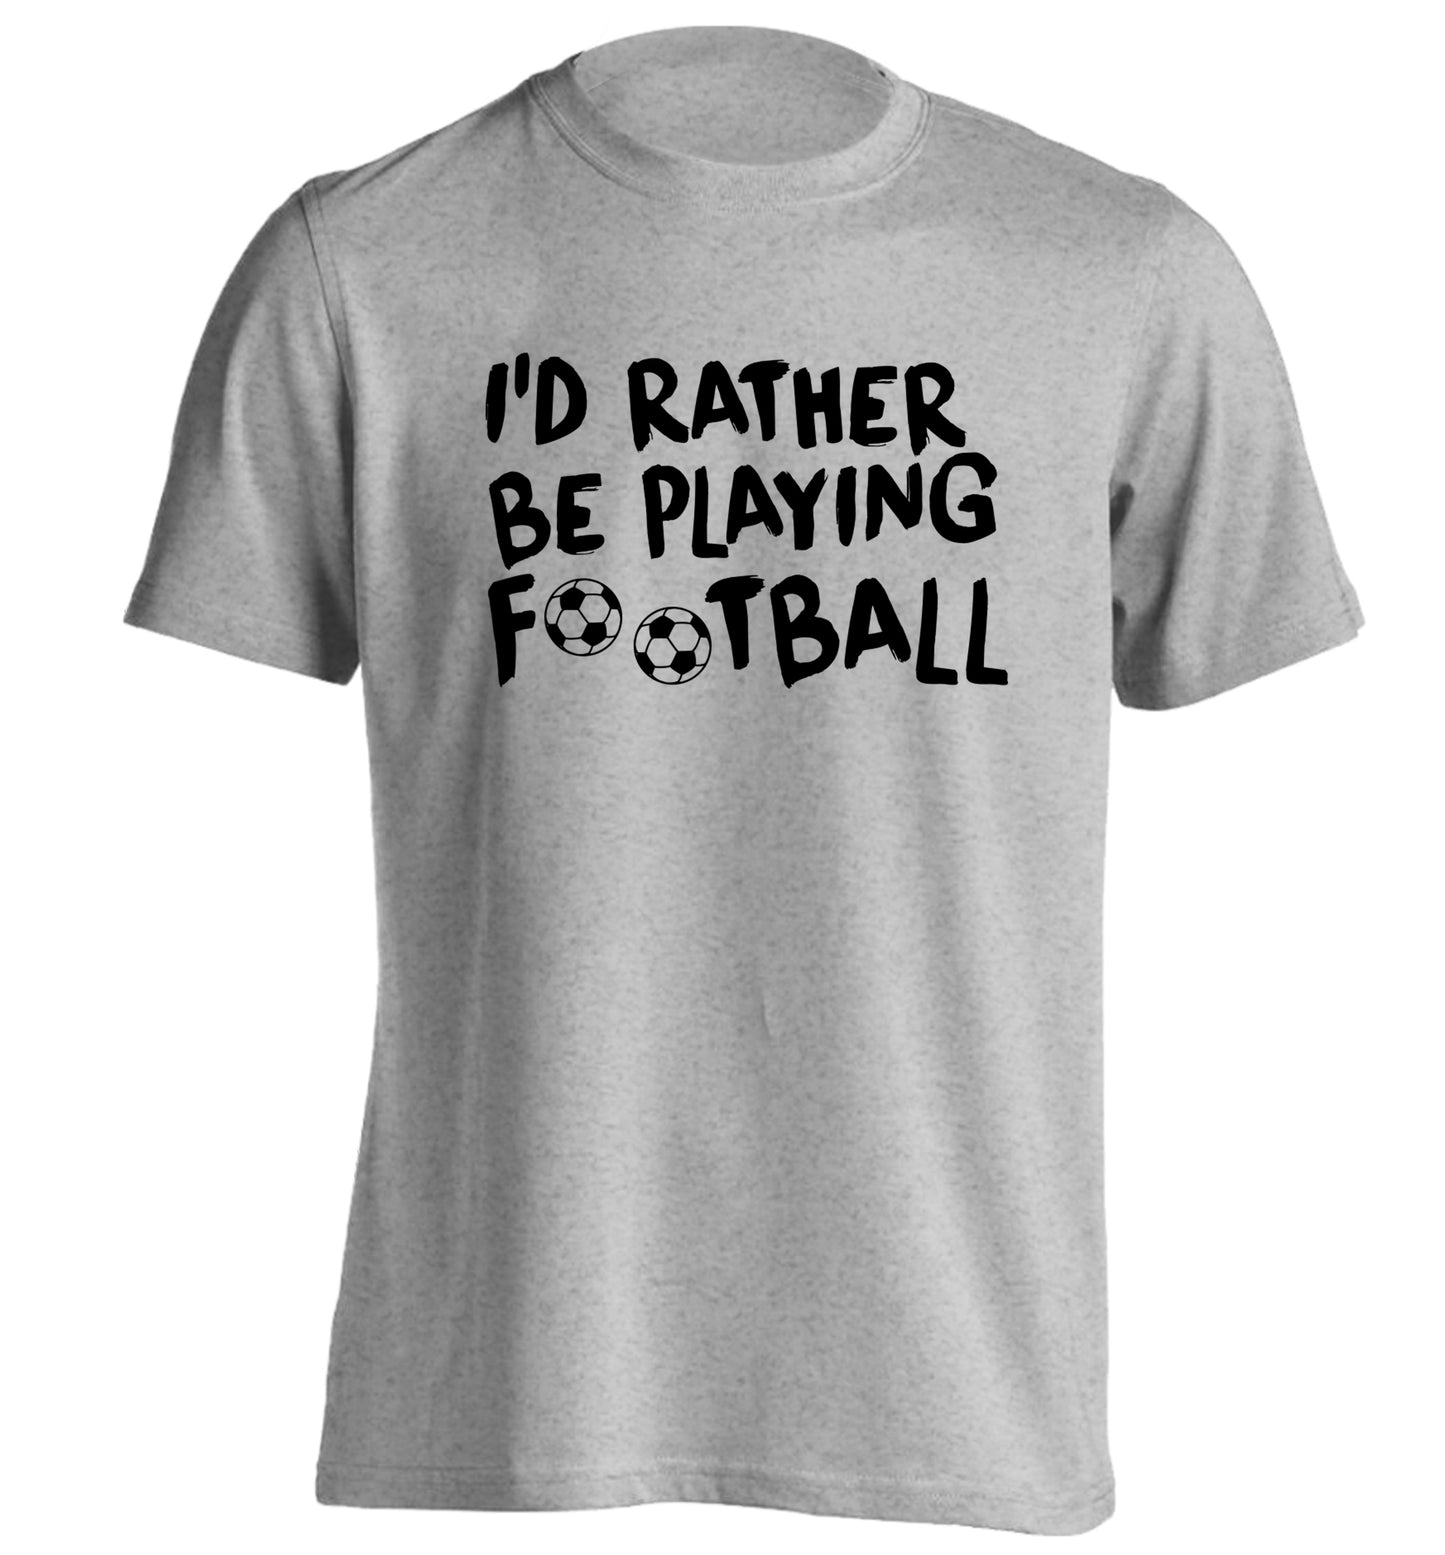 I'd rather be playing football adults unisexgrey Tshirt 2XL